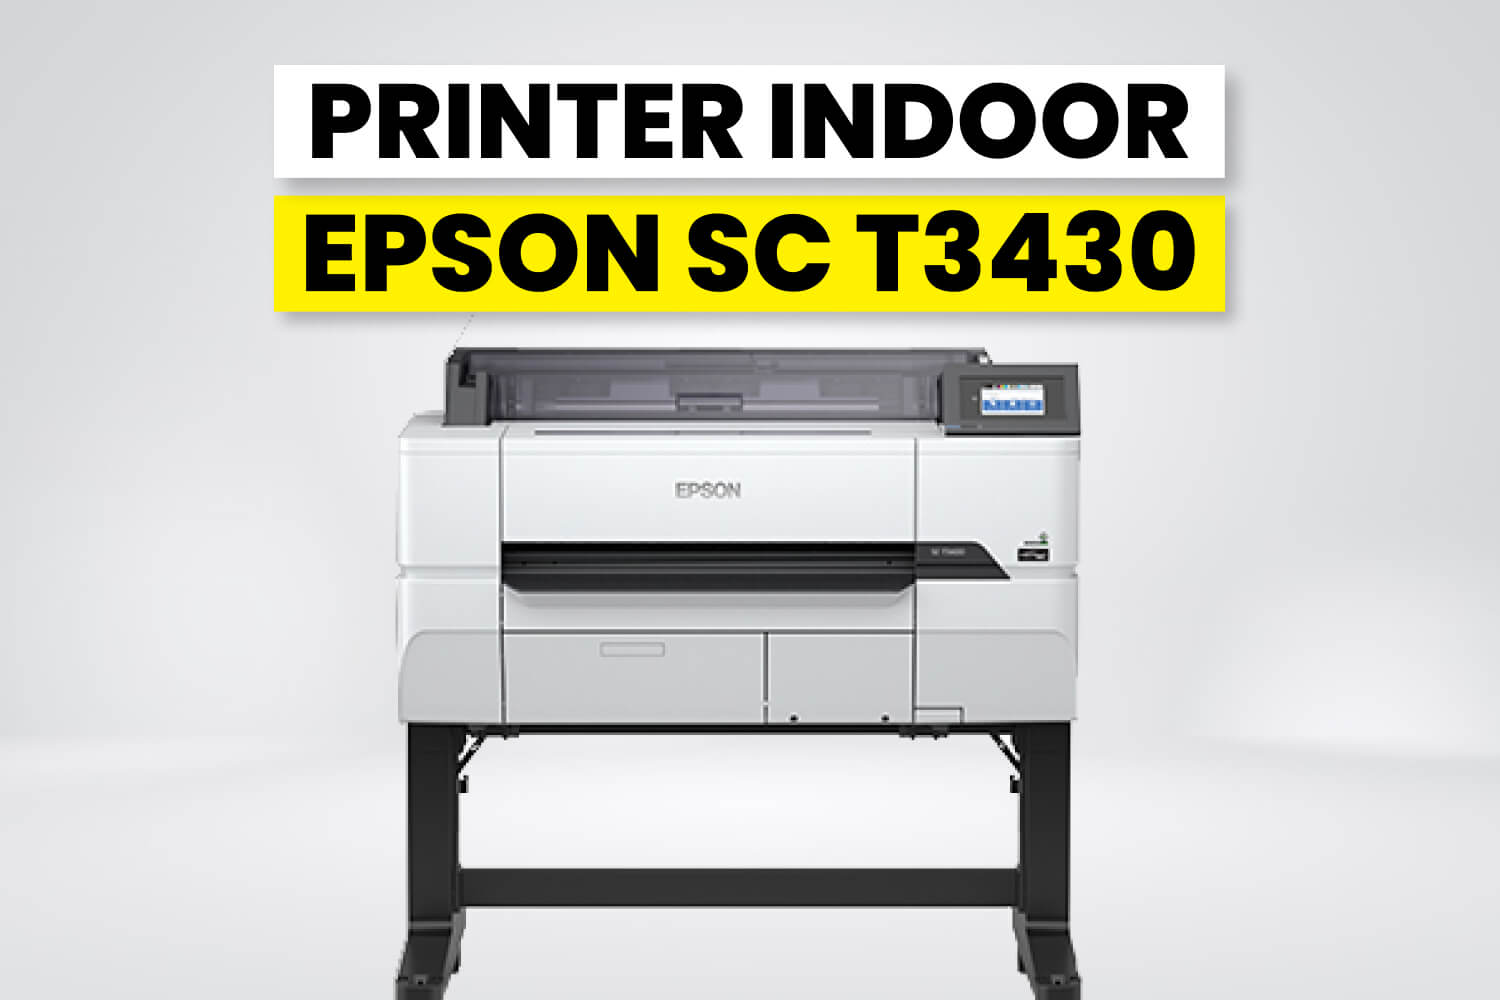 Printer Indoor Epson Surecolor Sc-T3430